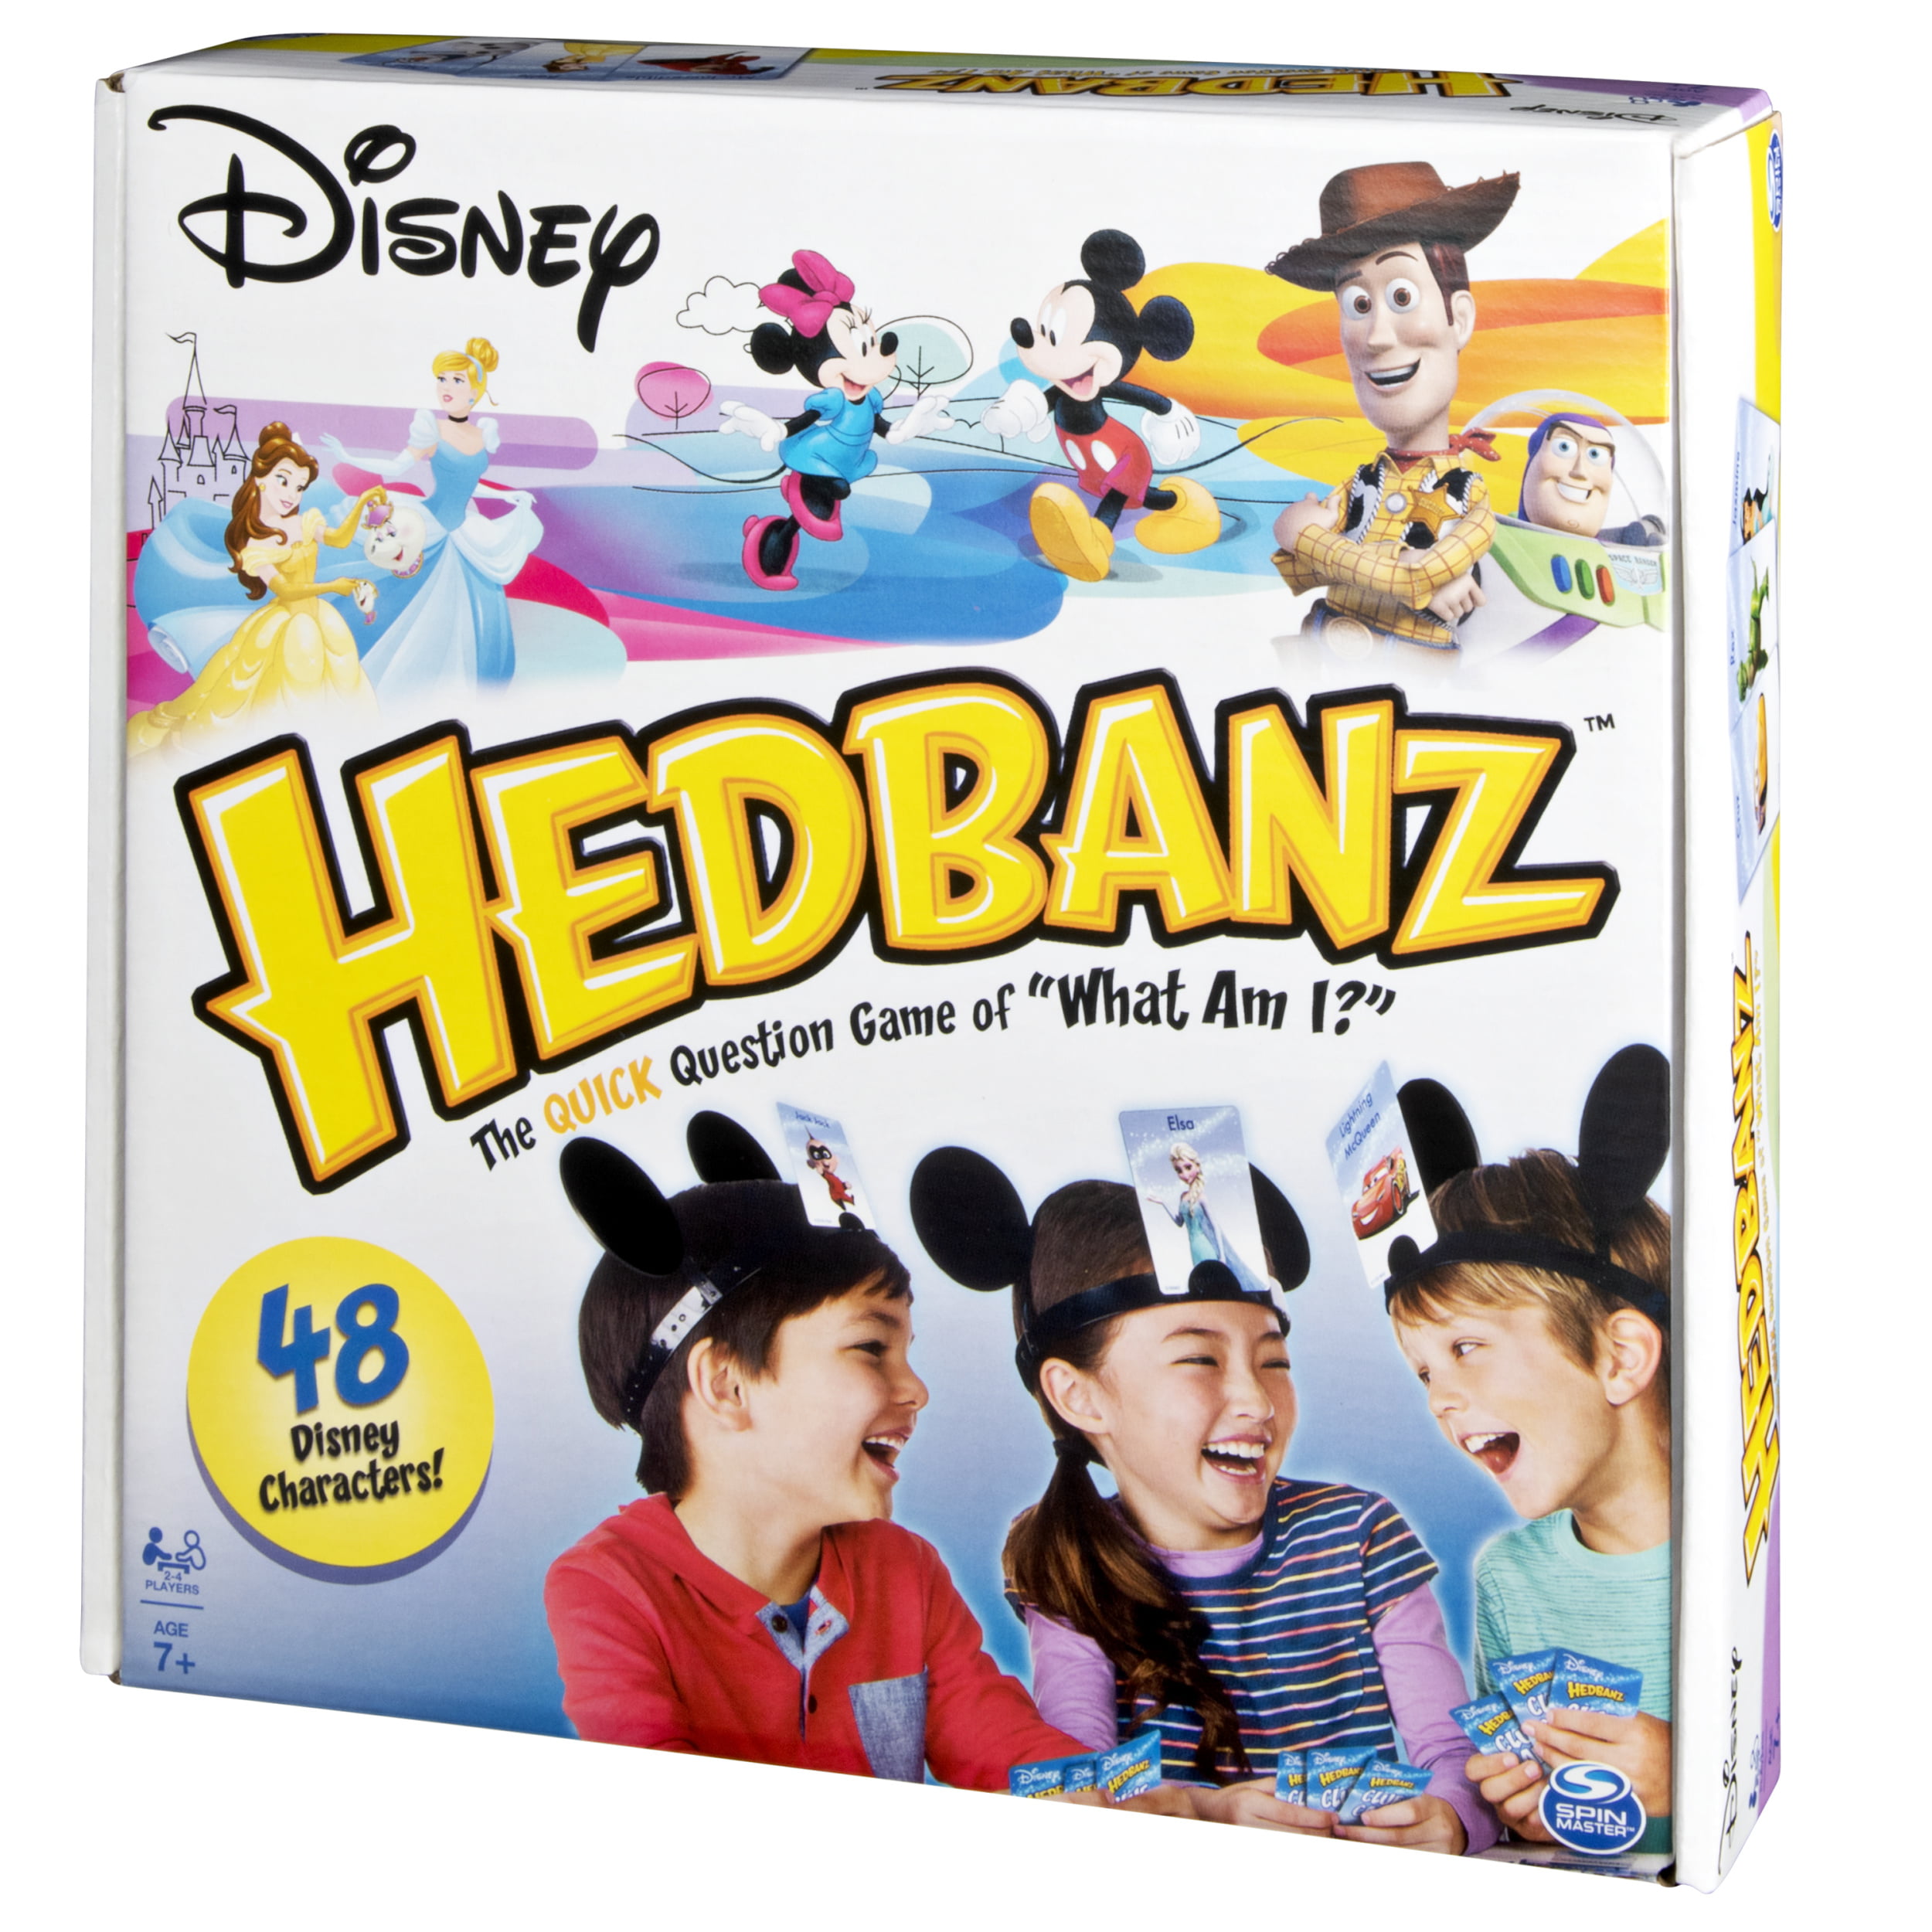 Disney headbanz Headrush Game 7 ans + 2-4 joueurs 48 caractères NEUF 